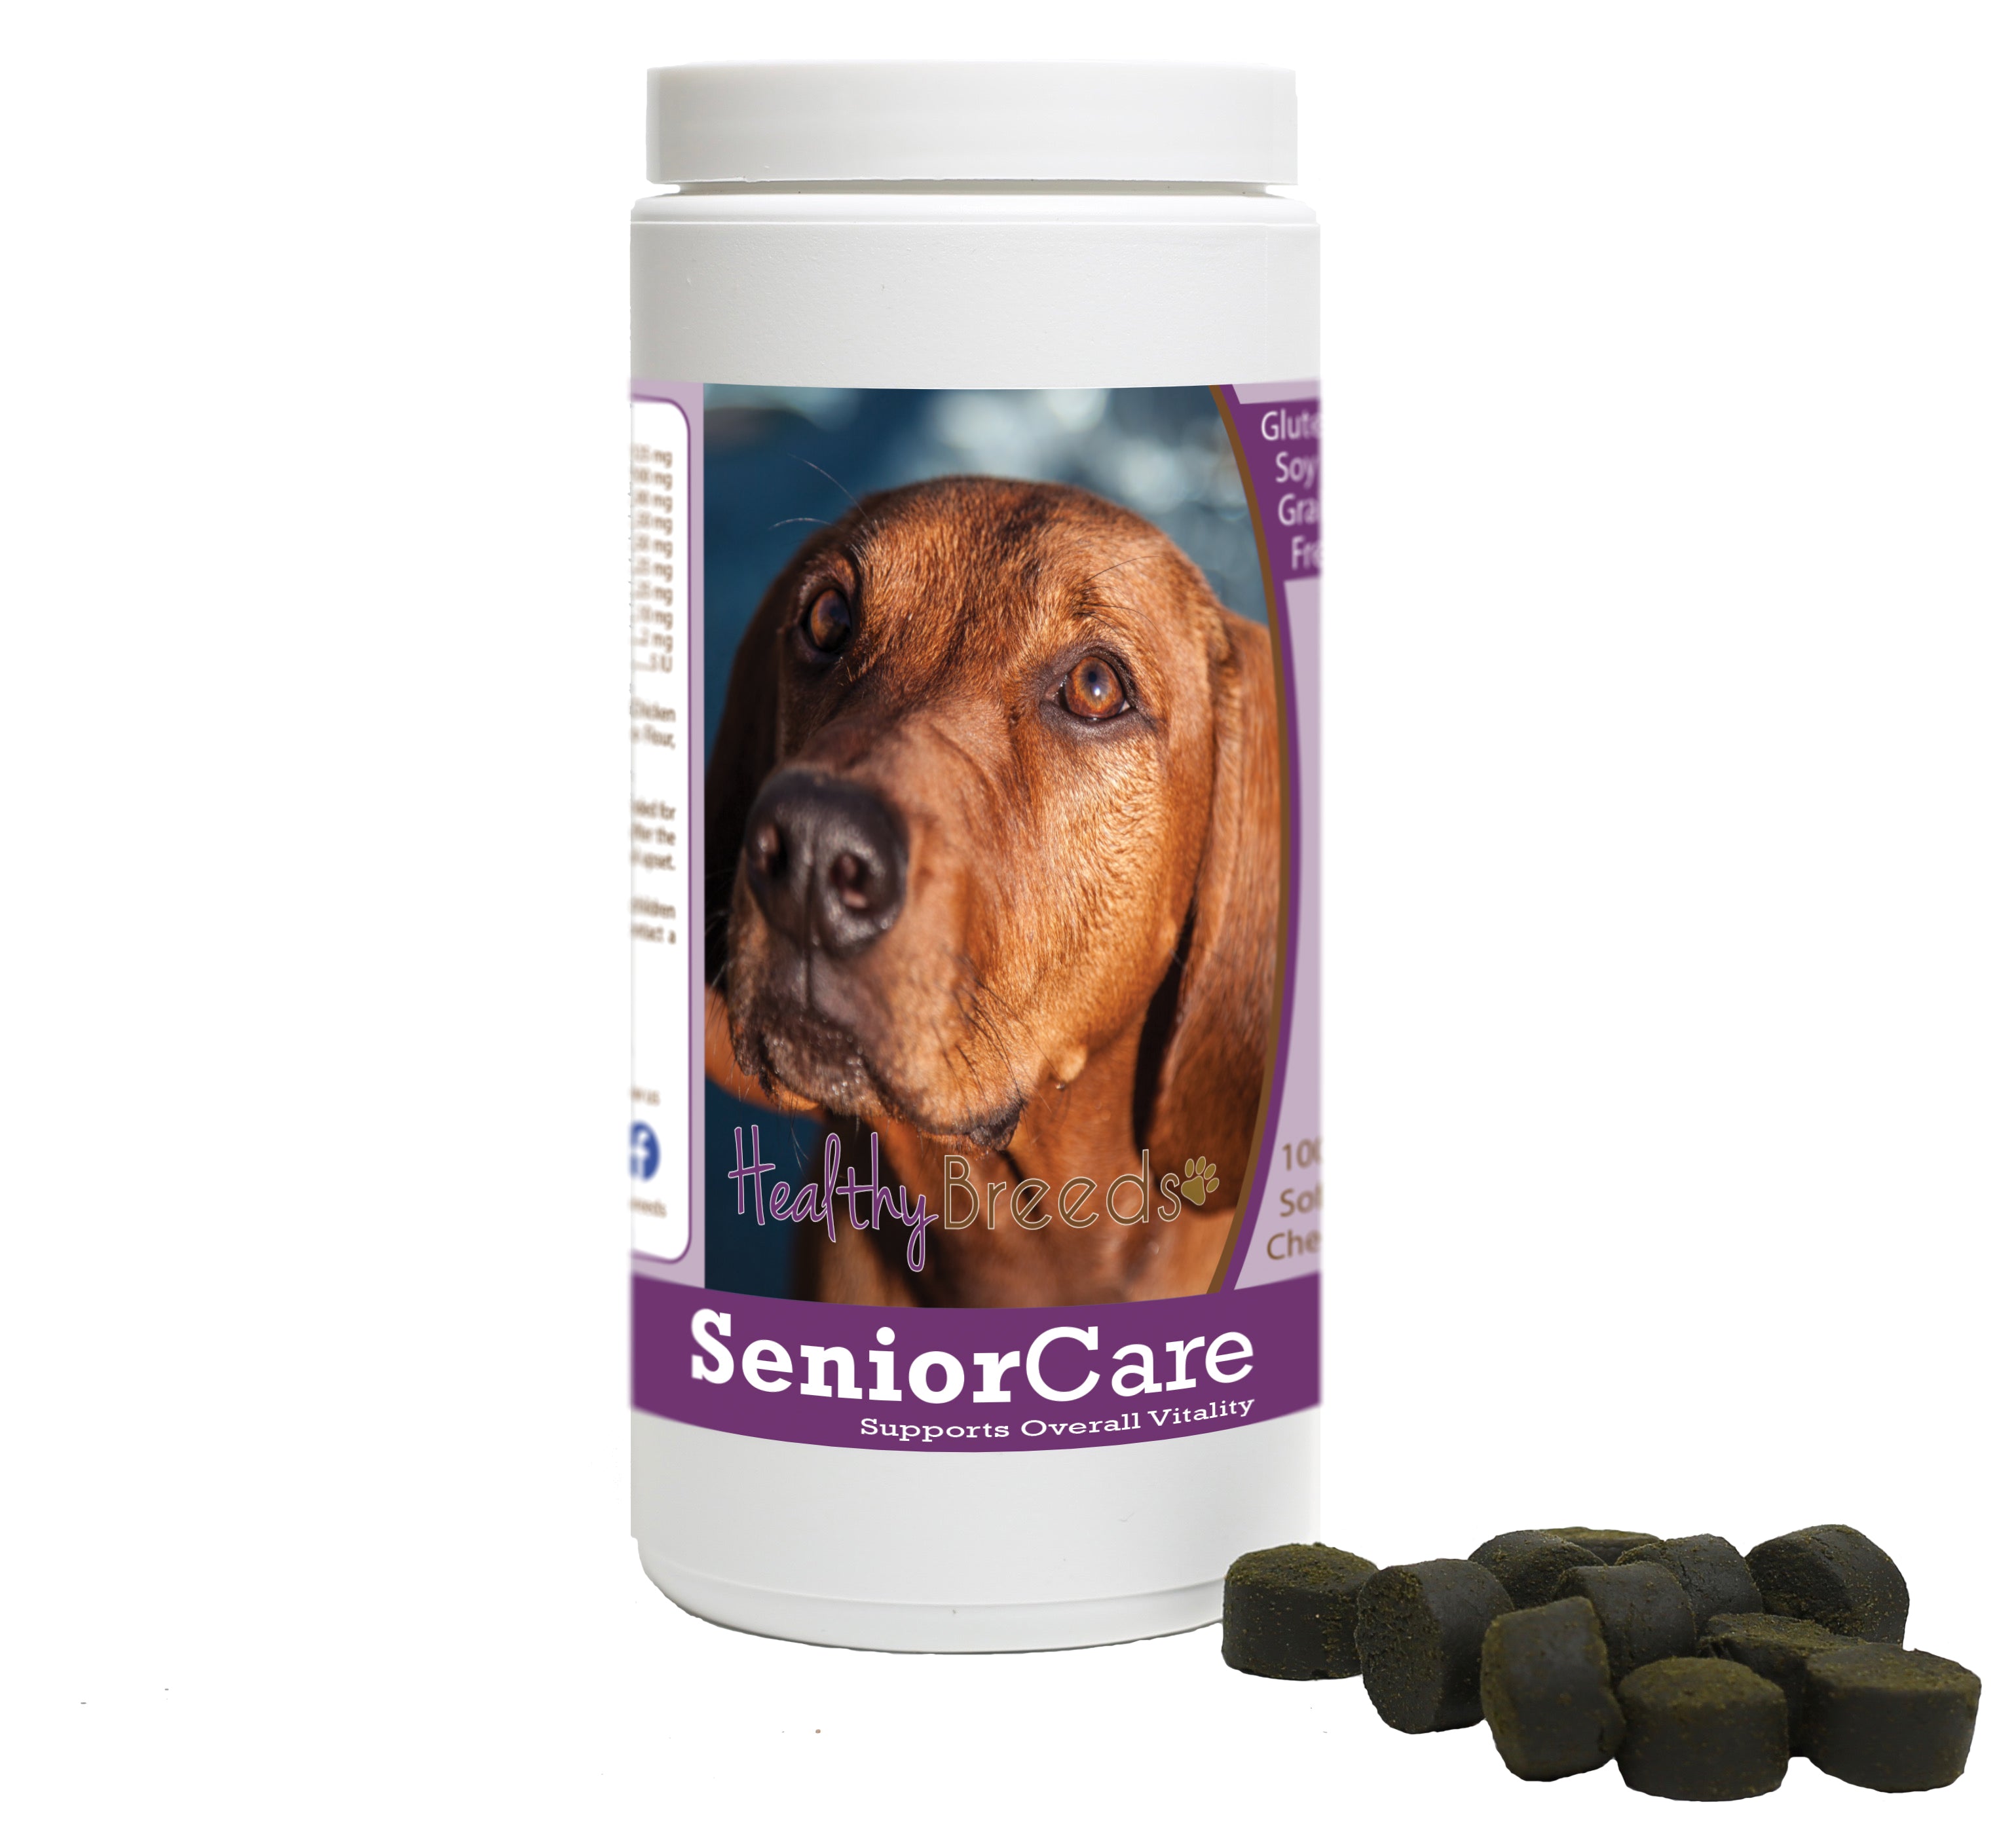 Redbone Coonhound Senior Dog Care Soft Chews 100 Count